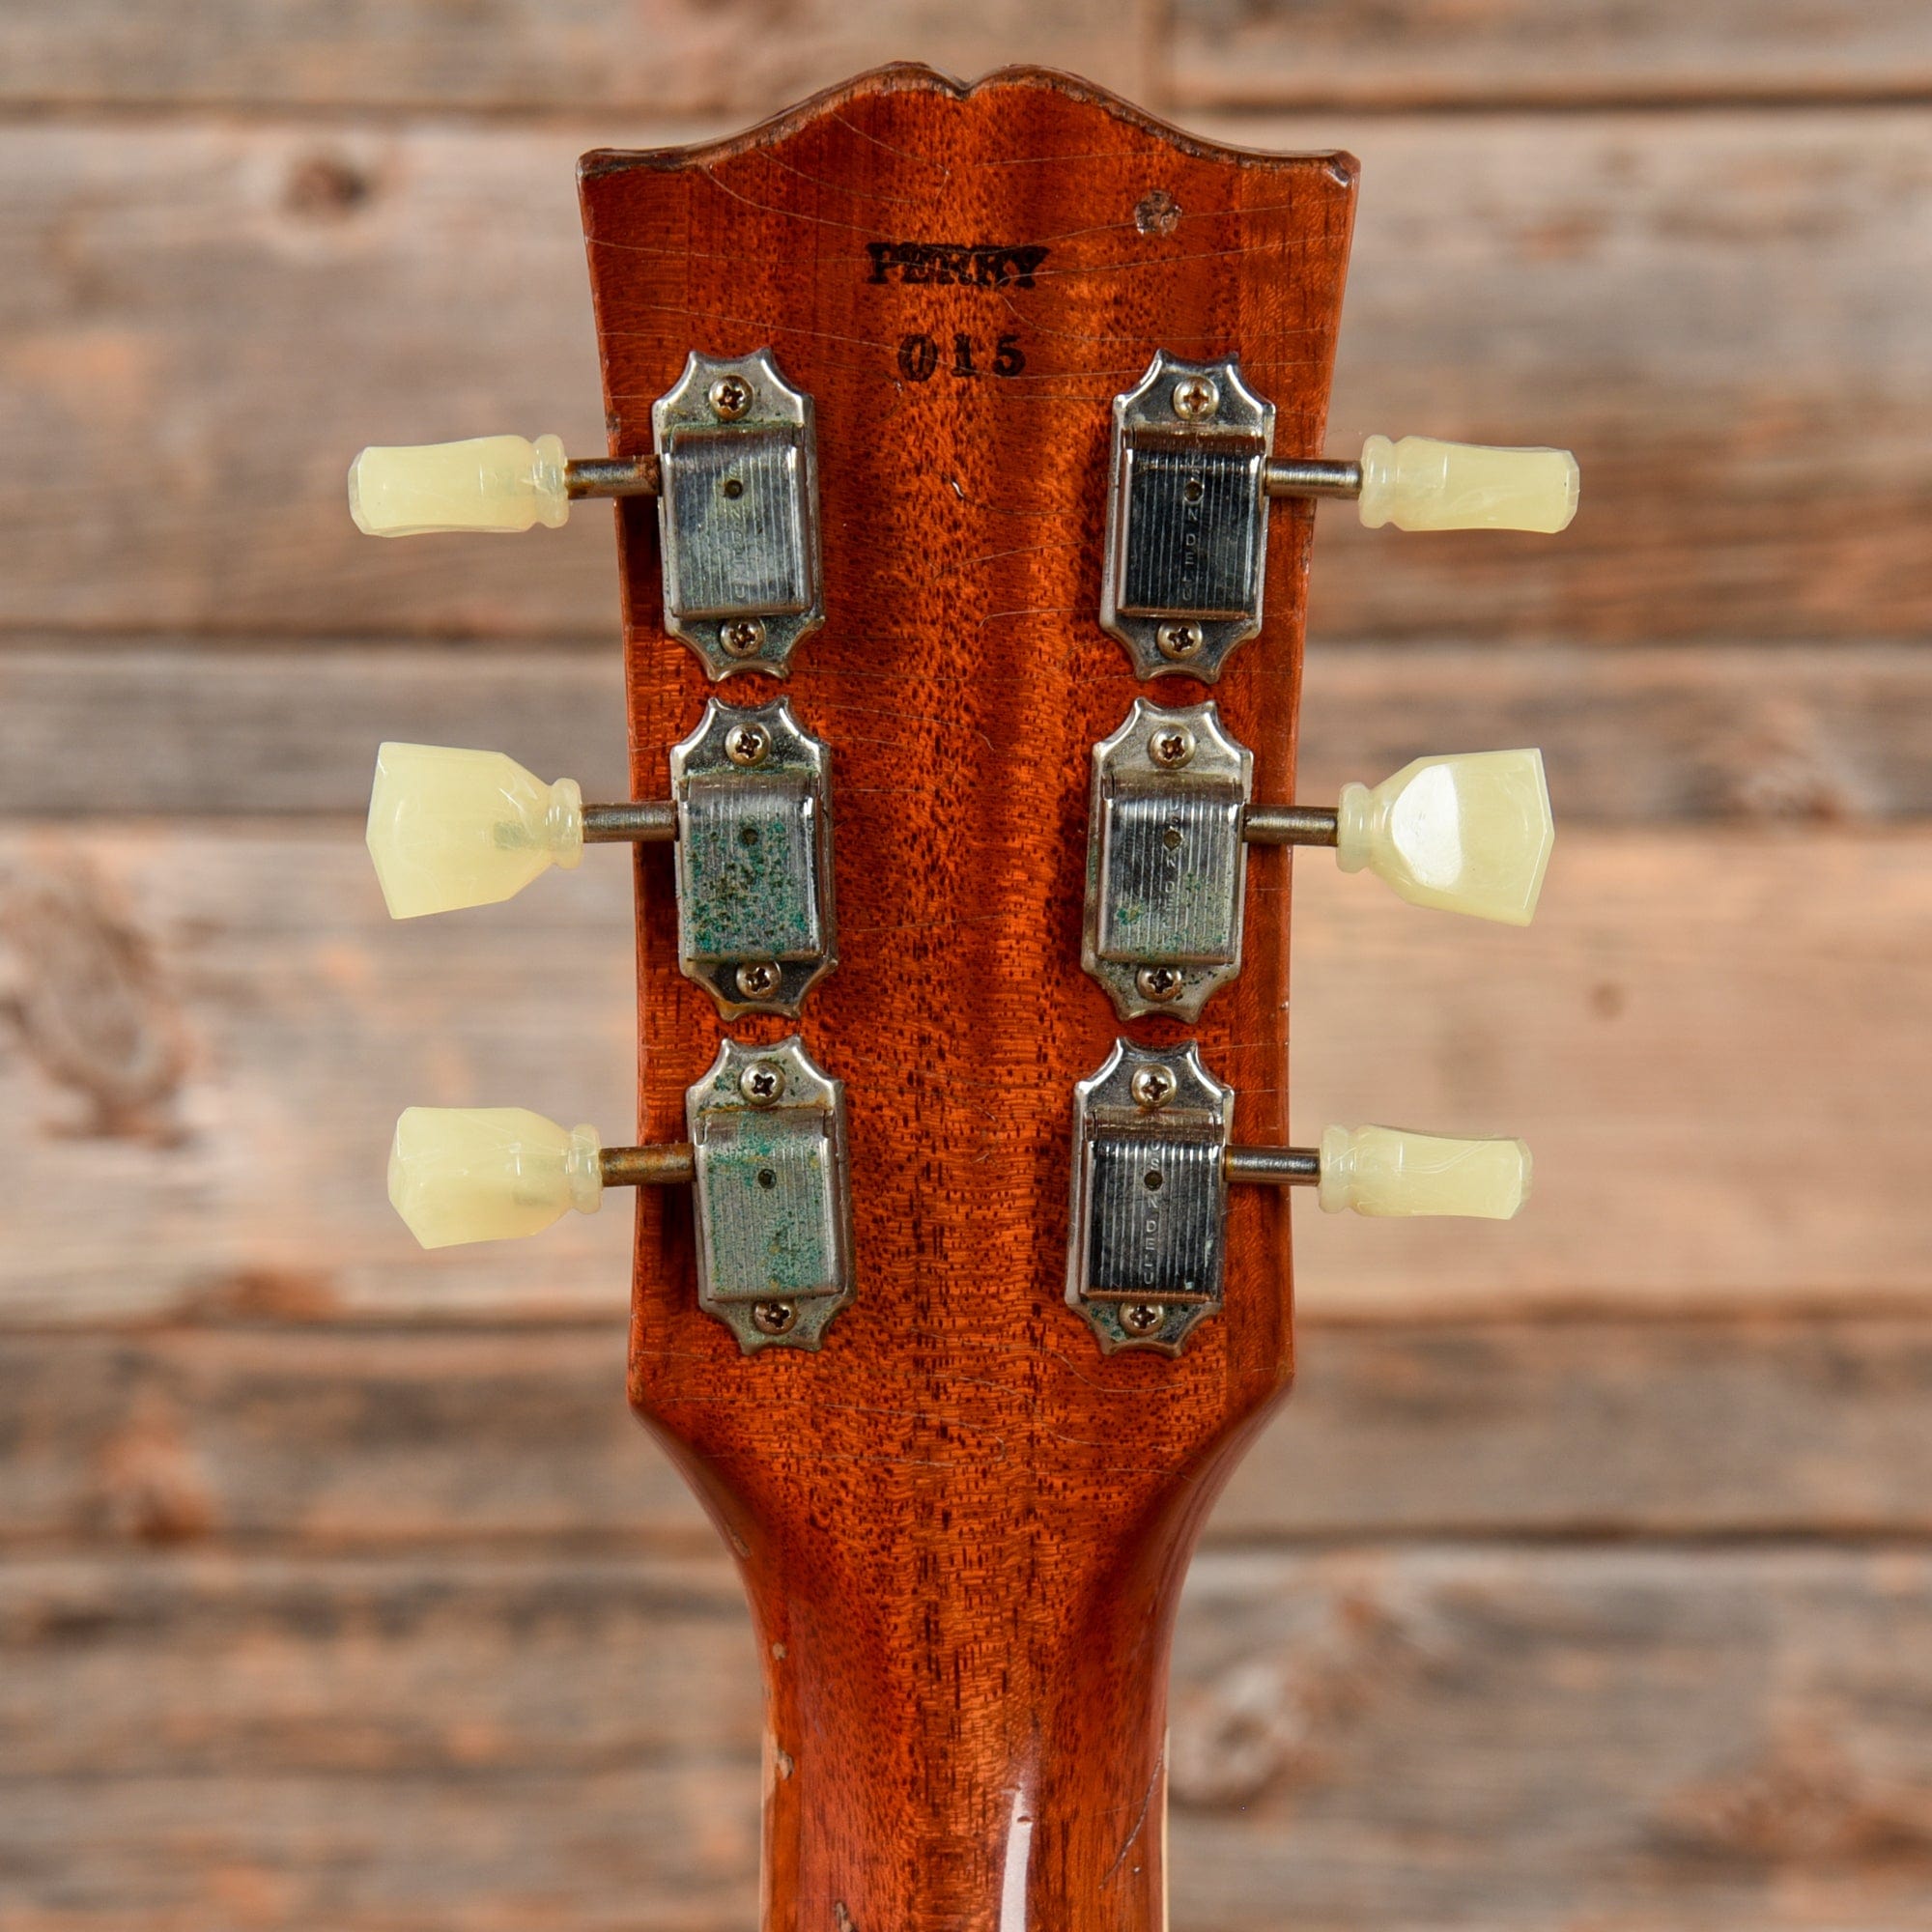 Gibson Custom Joe Perry '59 Les Paul Reissue Tom Murphy Aged Sunburst 2013 Electric Guitars / Solid Body